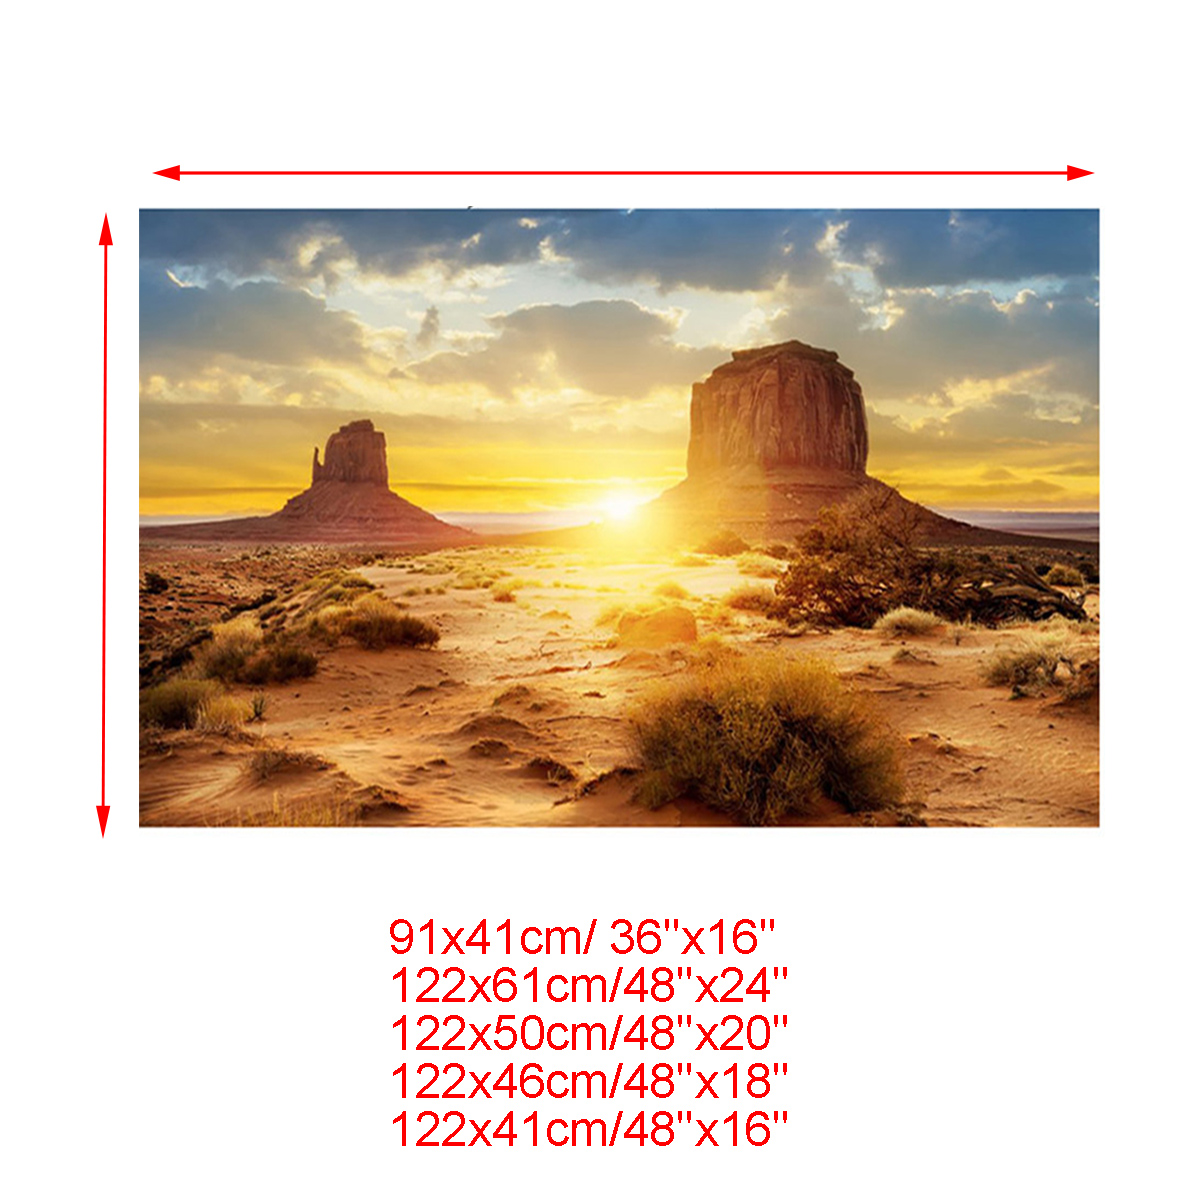 Sun-Desert-Adhesive-Poster-Aquarium-Fish-Tank-Background-Sticker-Home-Office-Decor-1749093-1